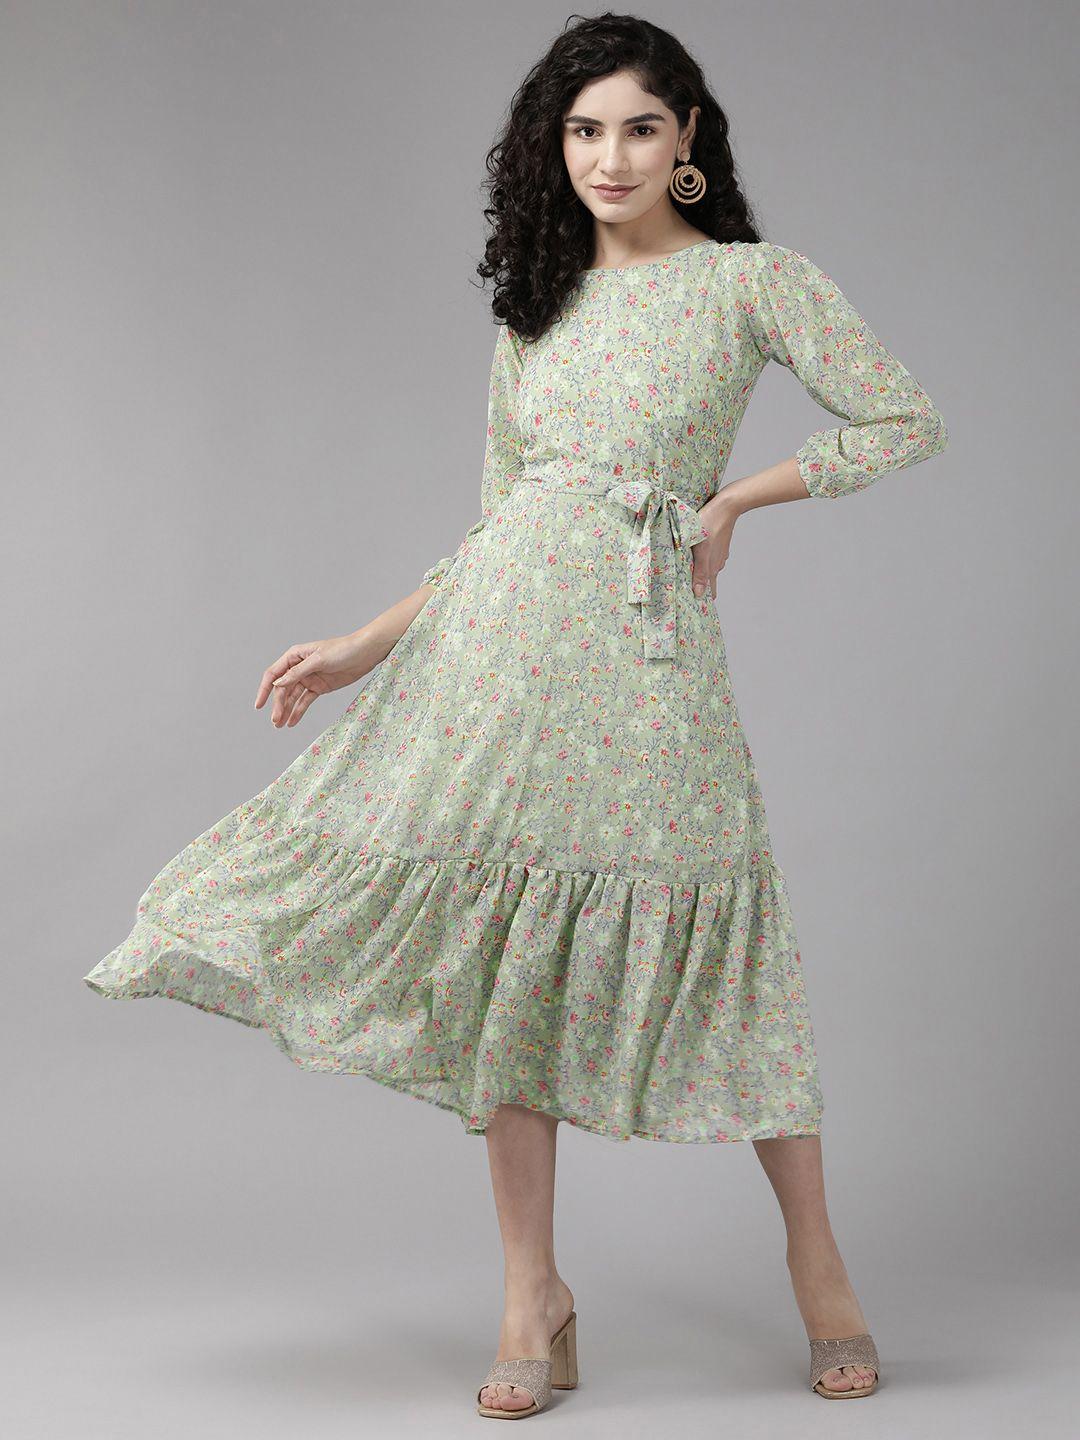 aarika-floral-georgette-a-line-midi-dress